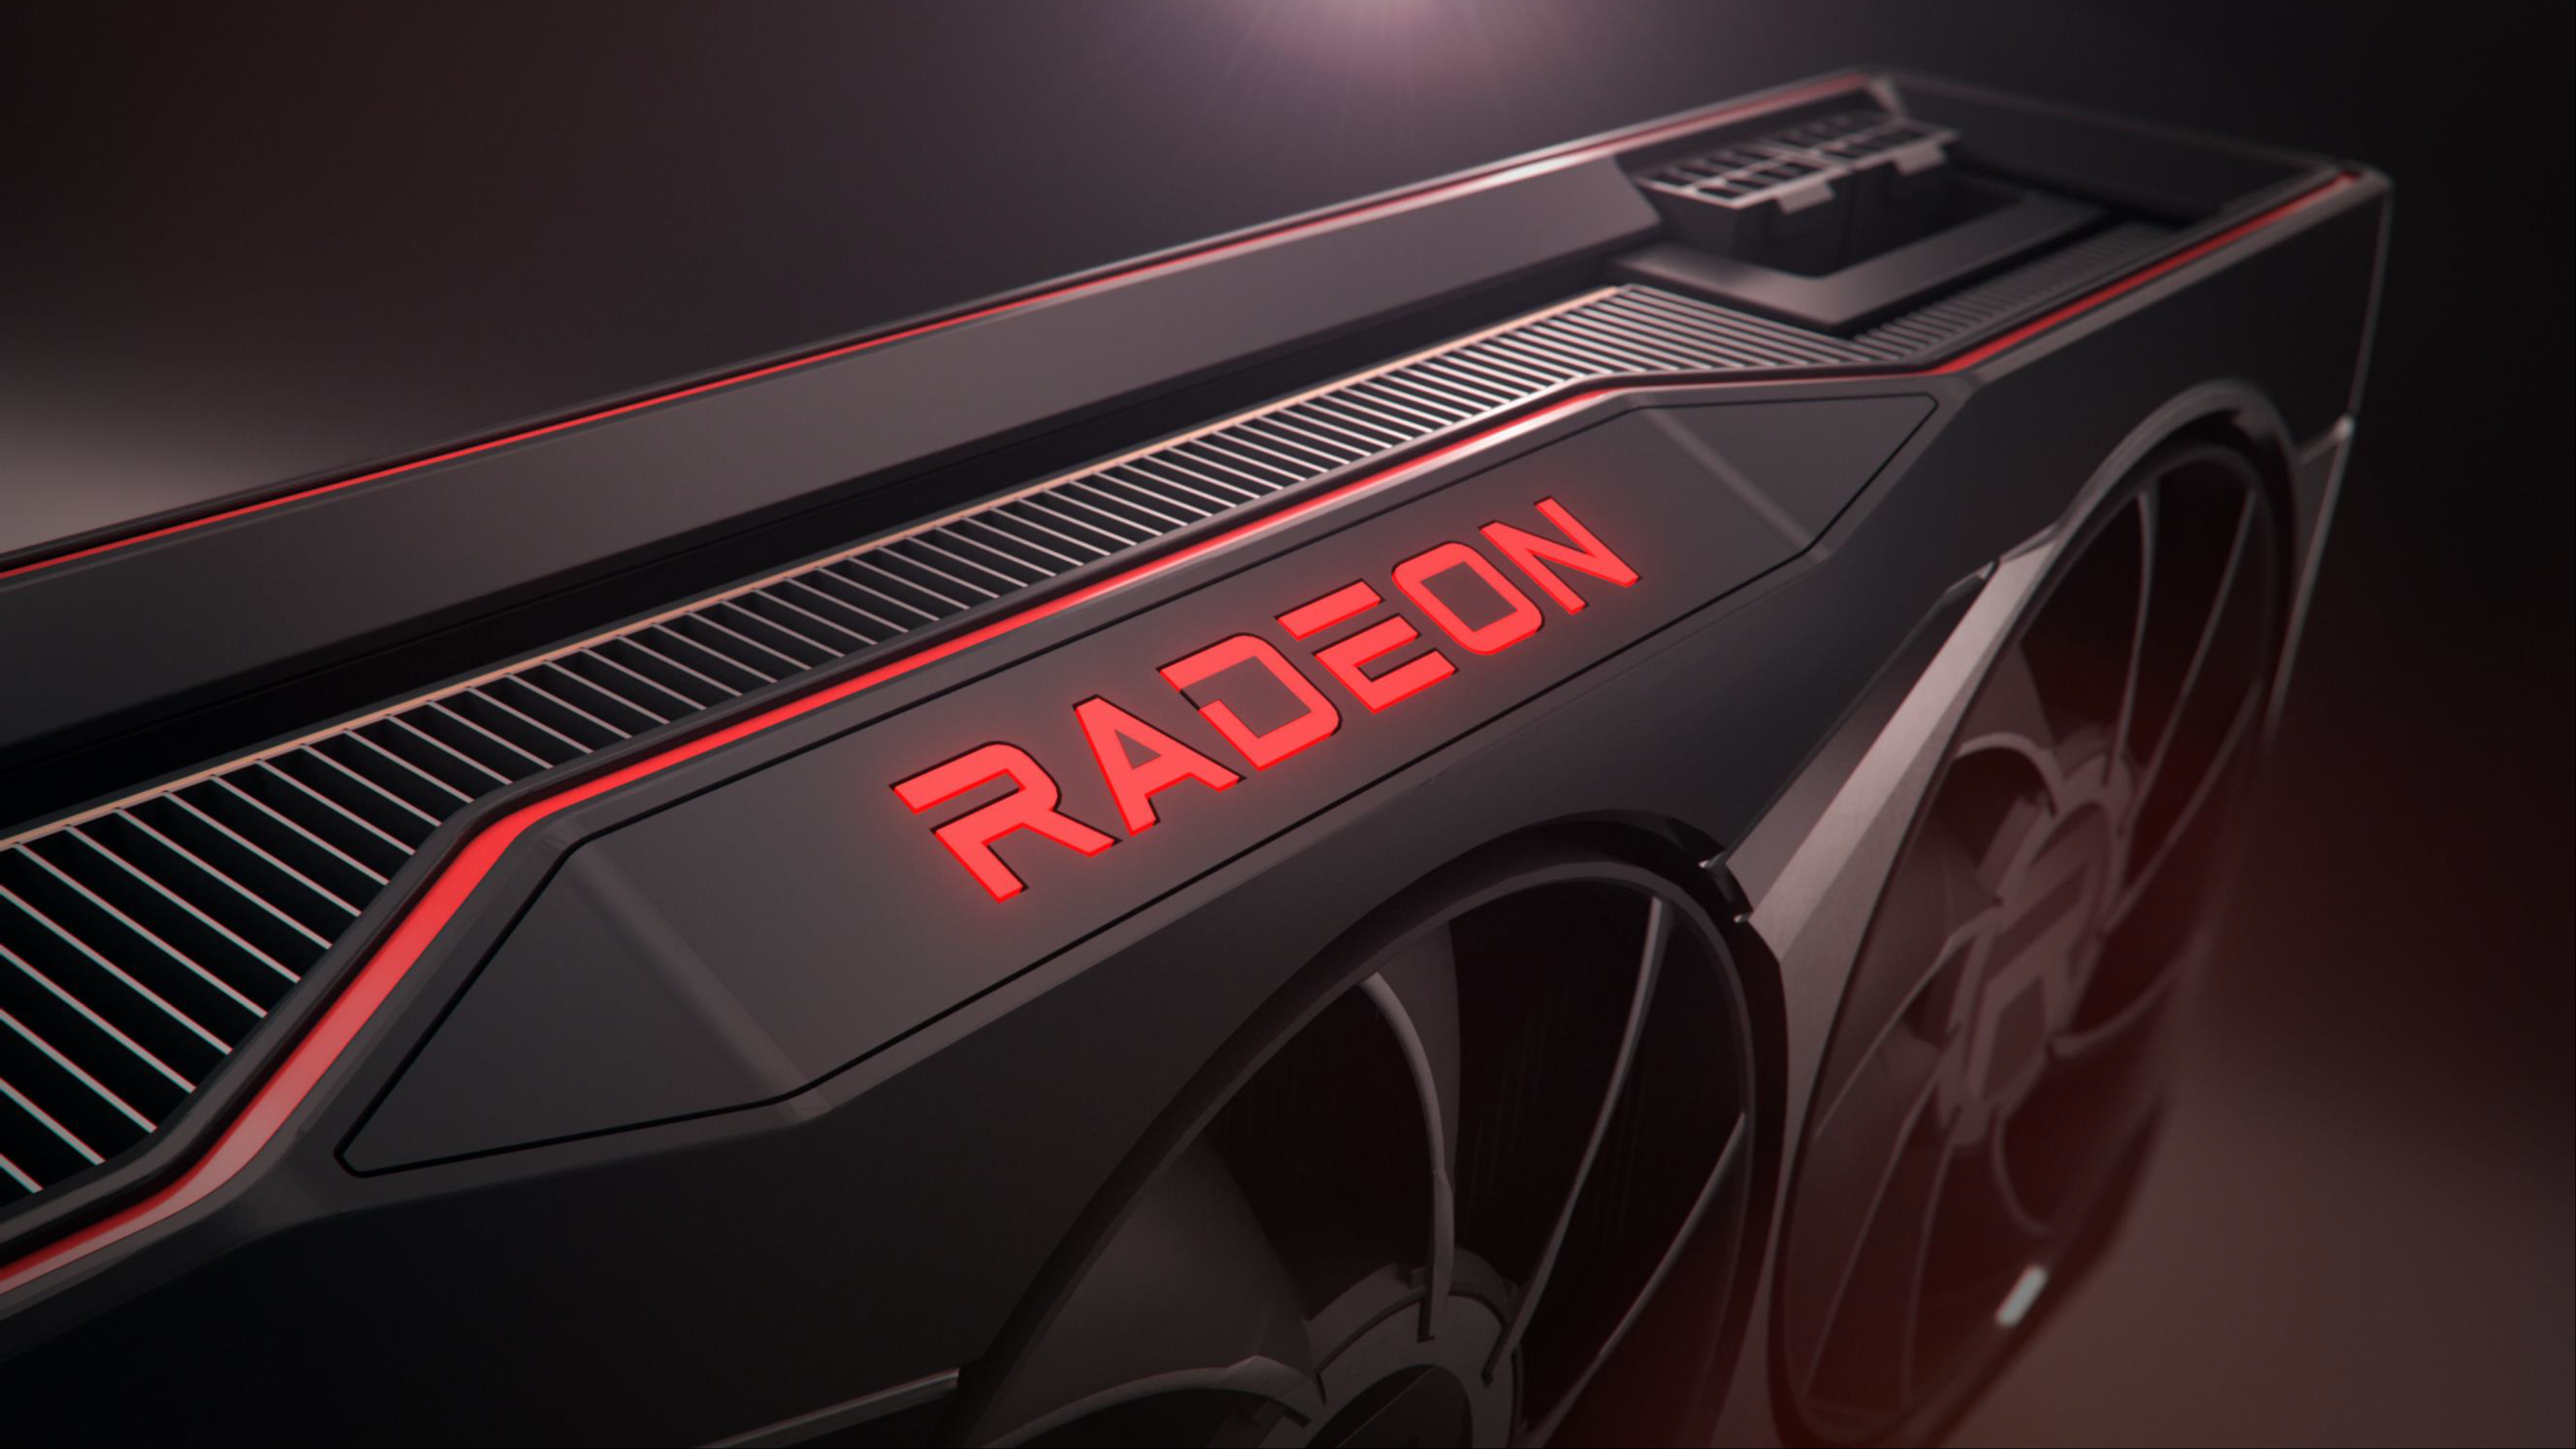 AMD-Radeon-RX-6000-Series_Big-Navi-GPU_Graphics-Card_1